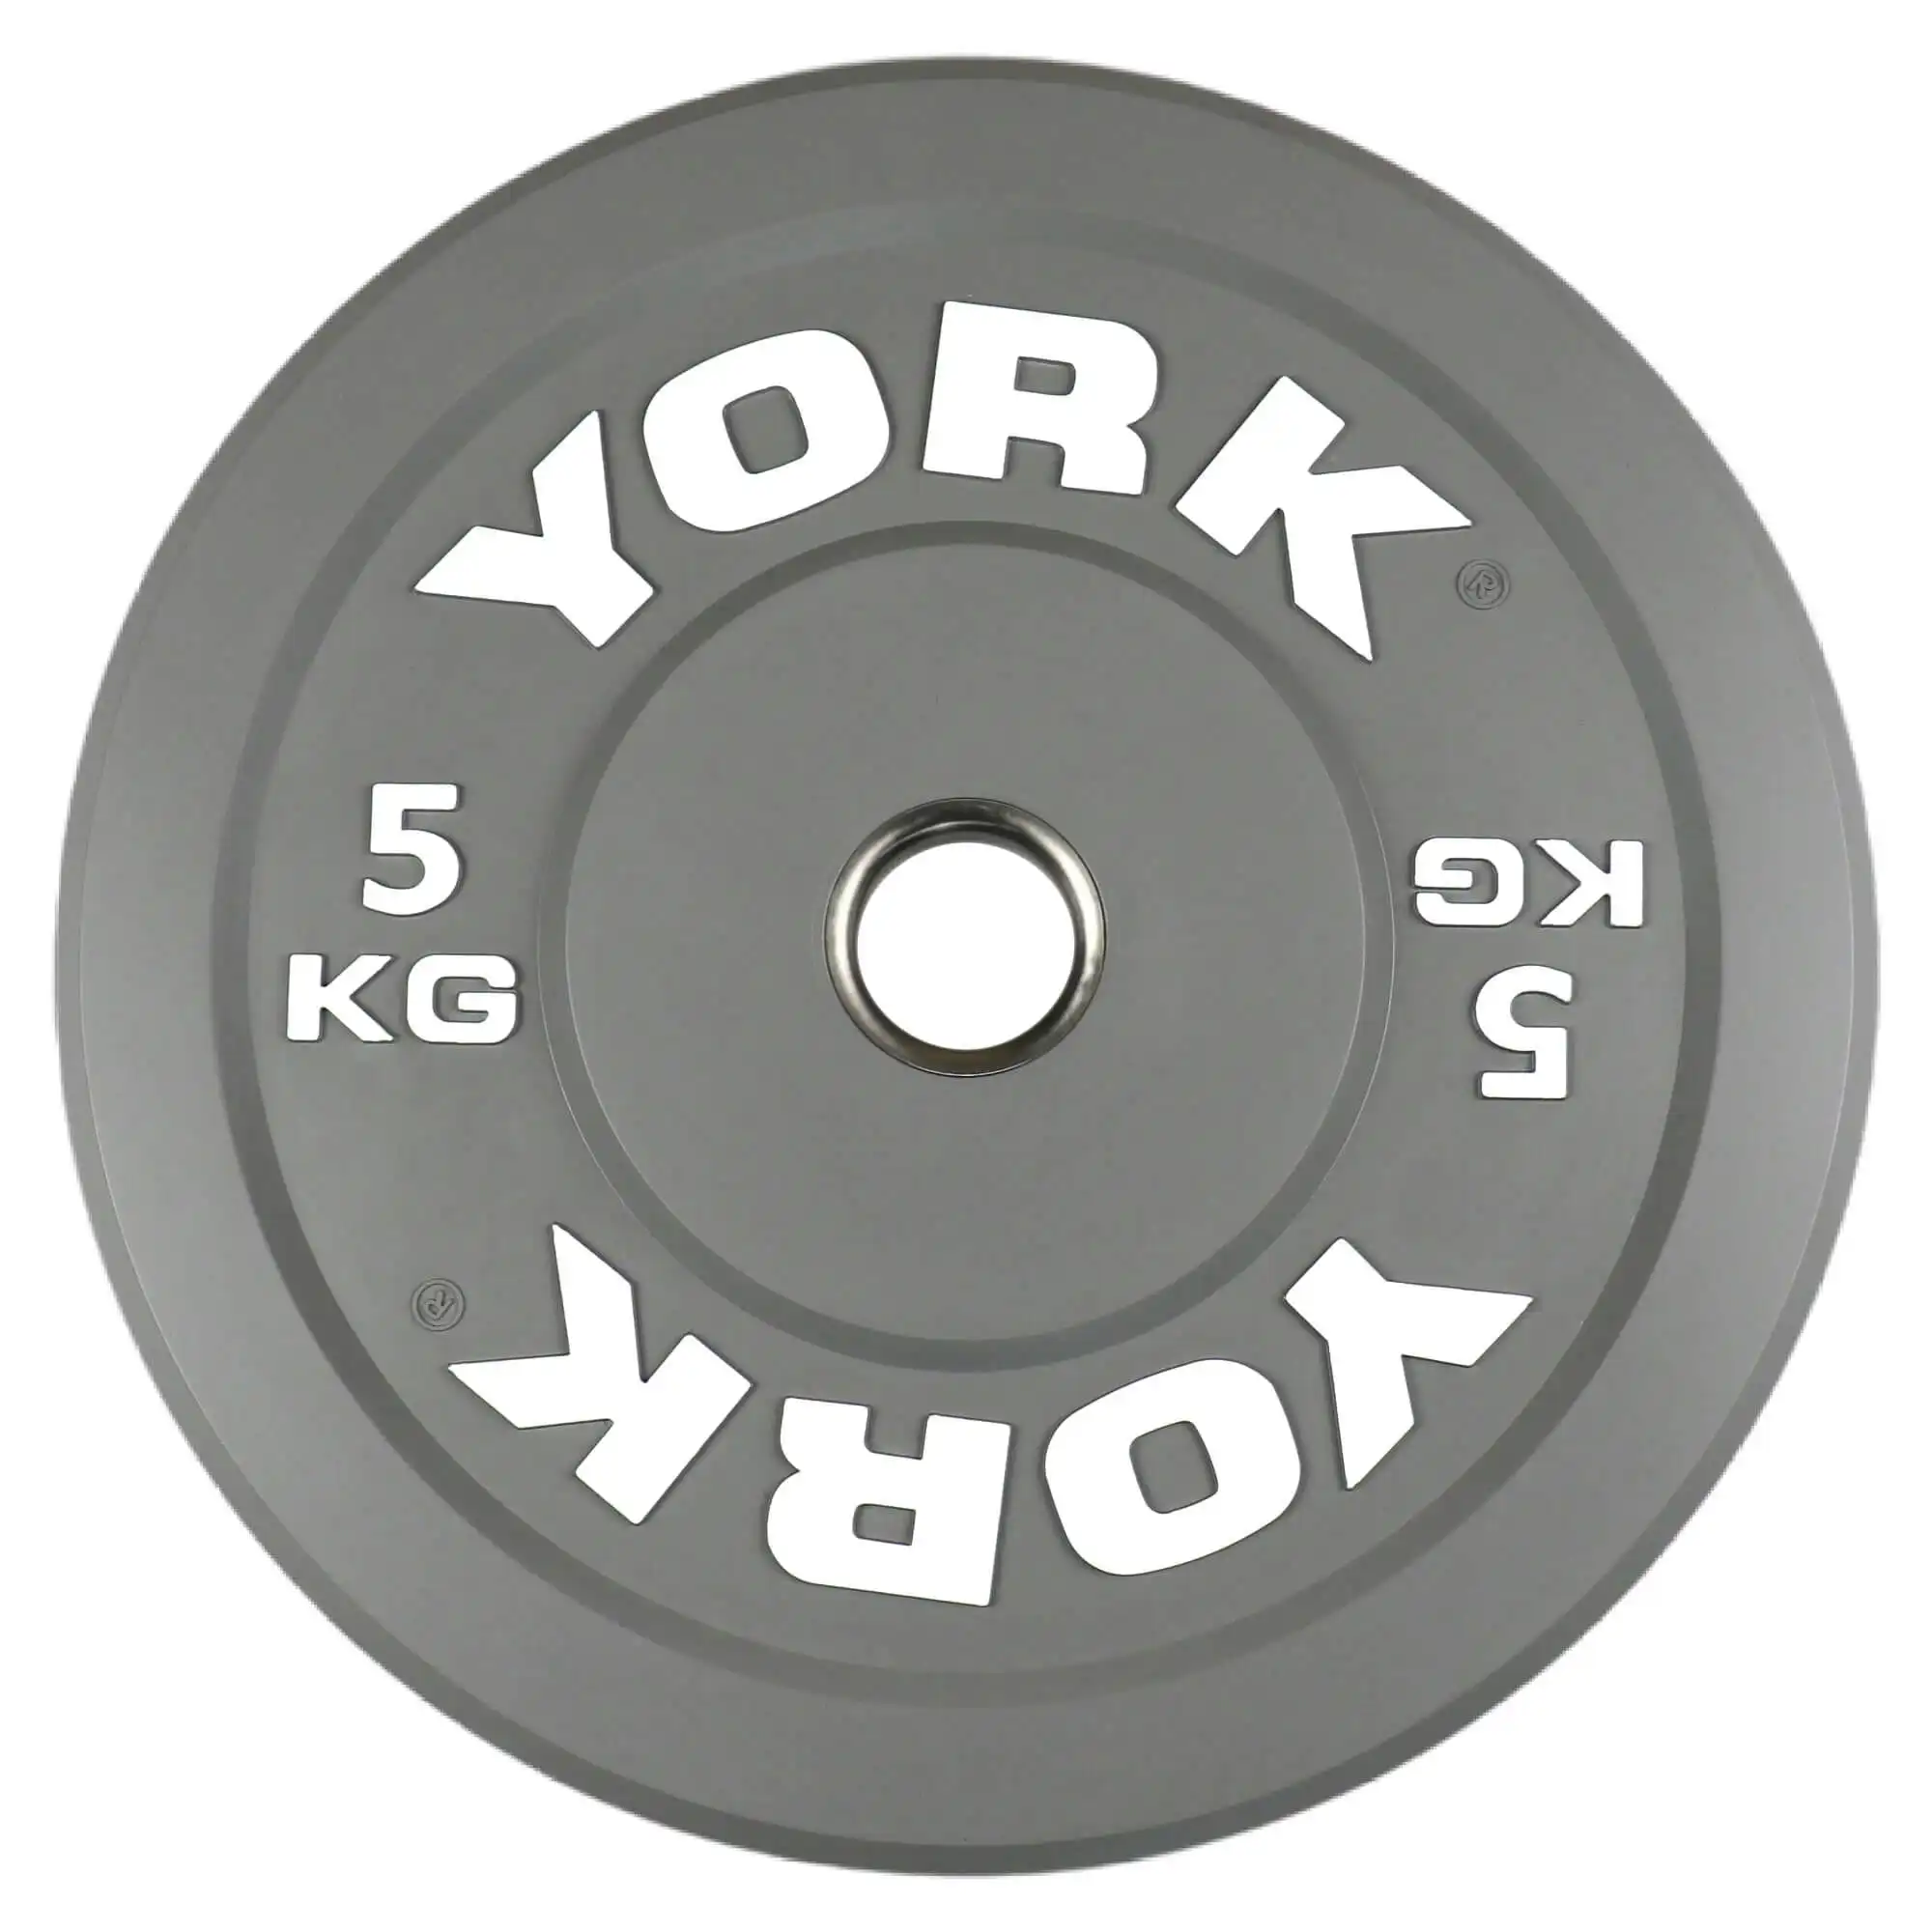 York Fitness 5KG Grey Rubber bumper plate